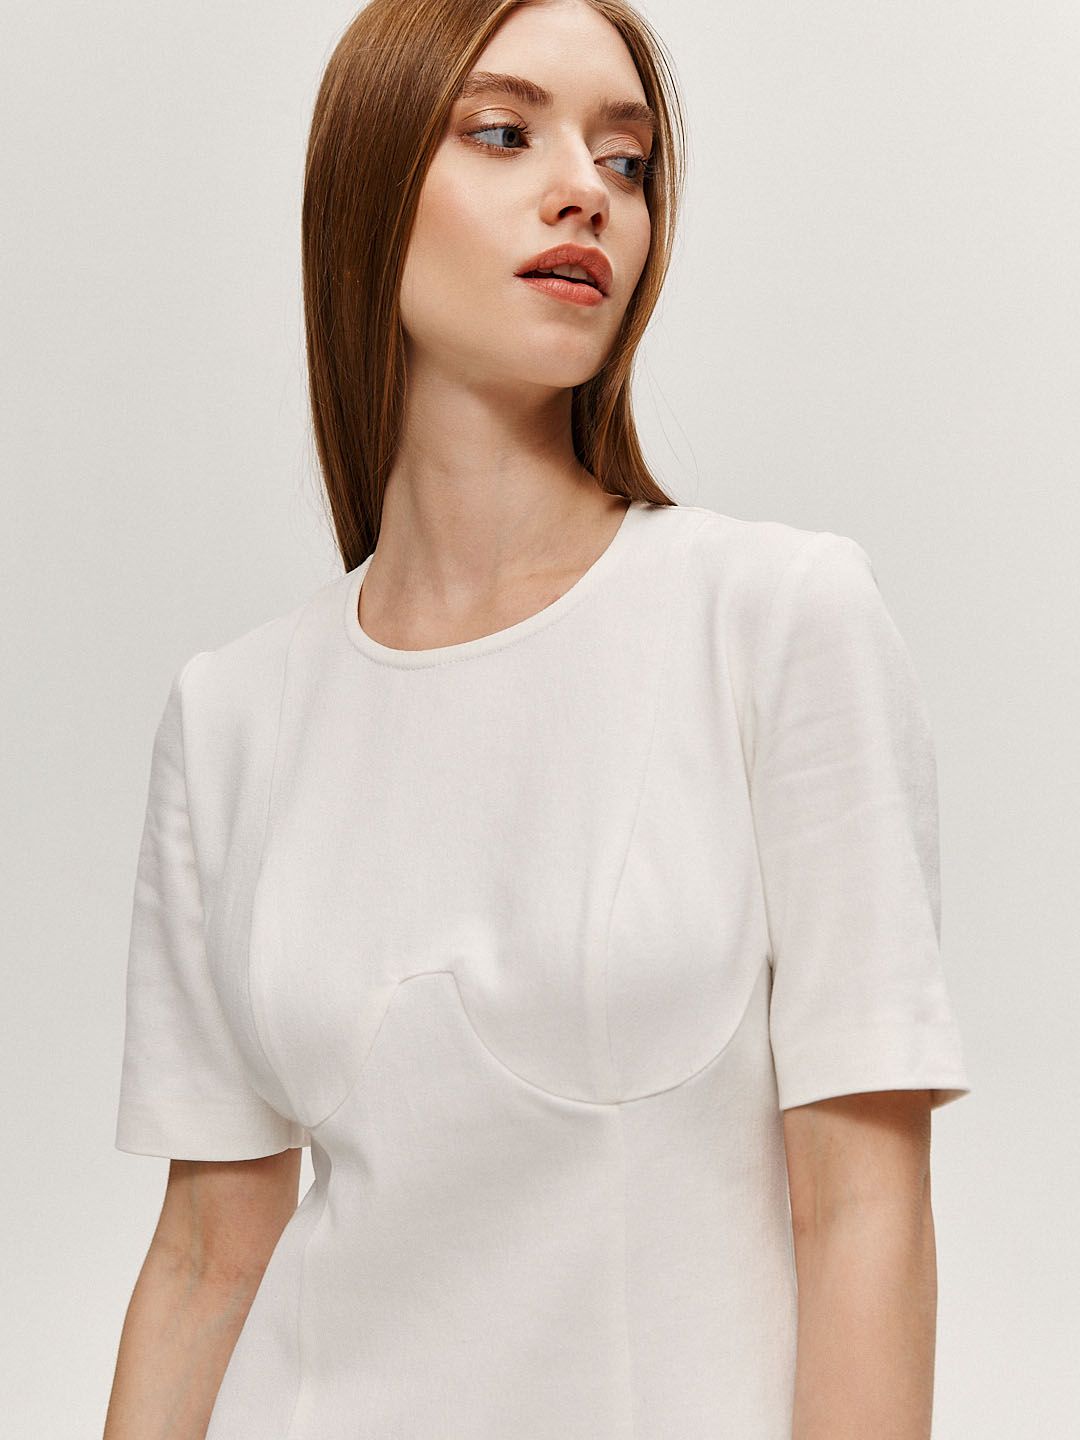 Платье футляр с коротким рукавом белое